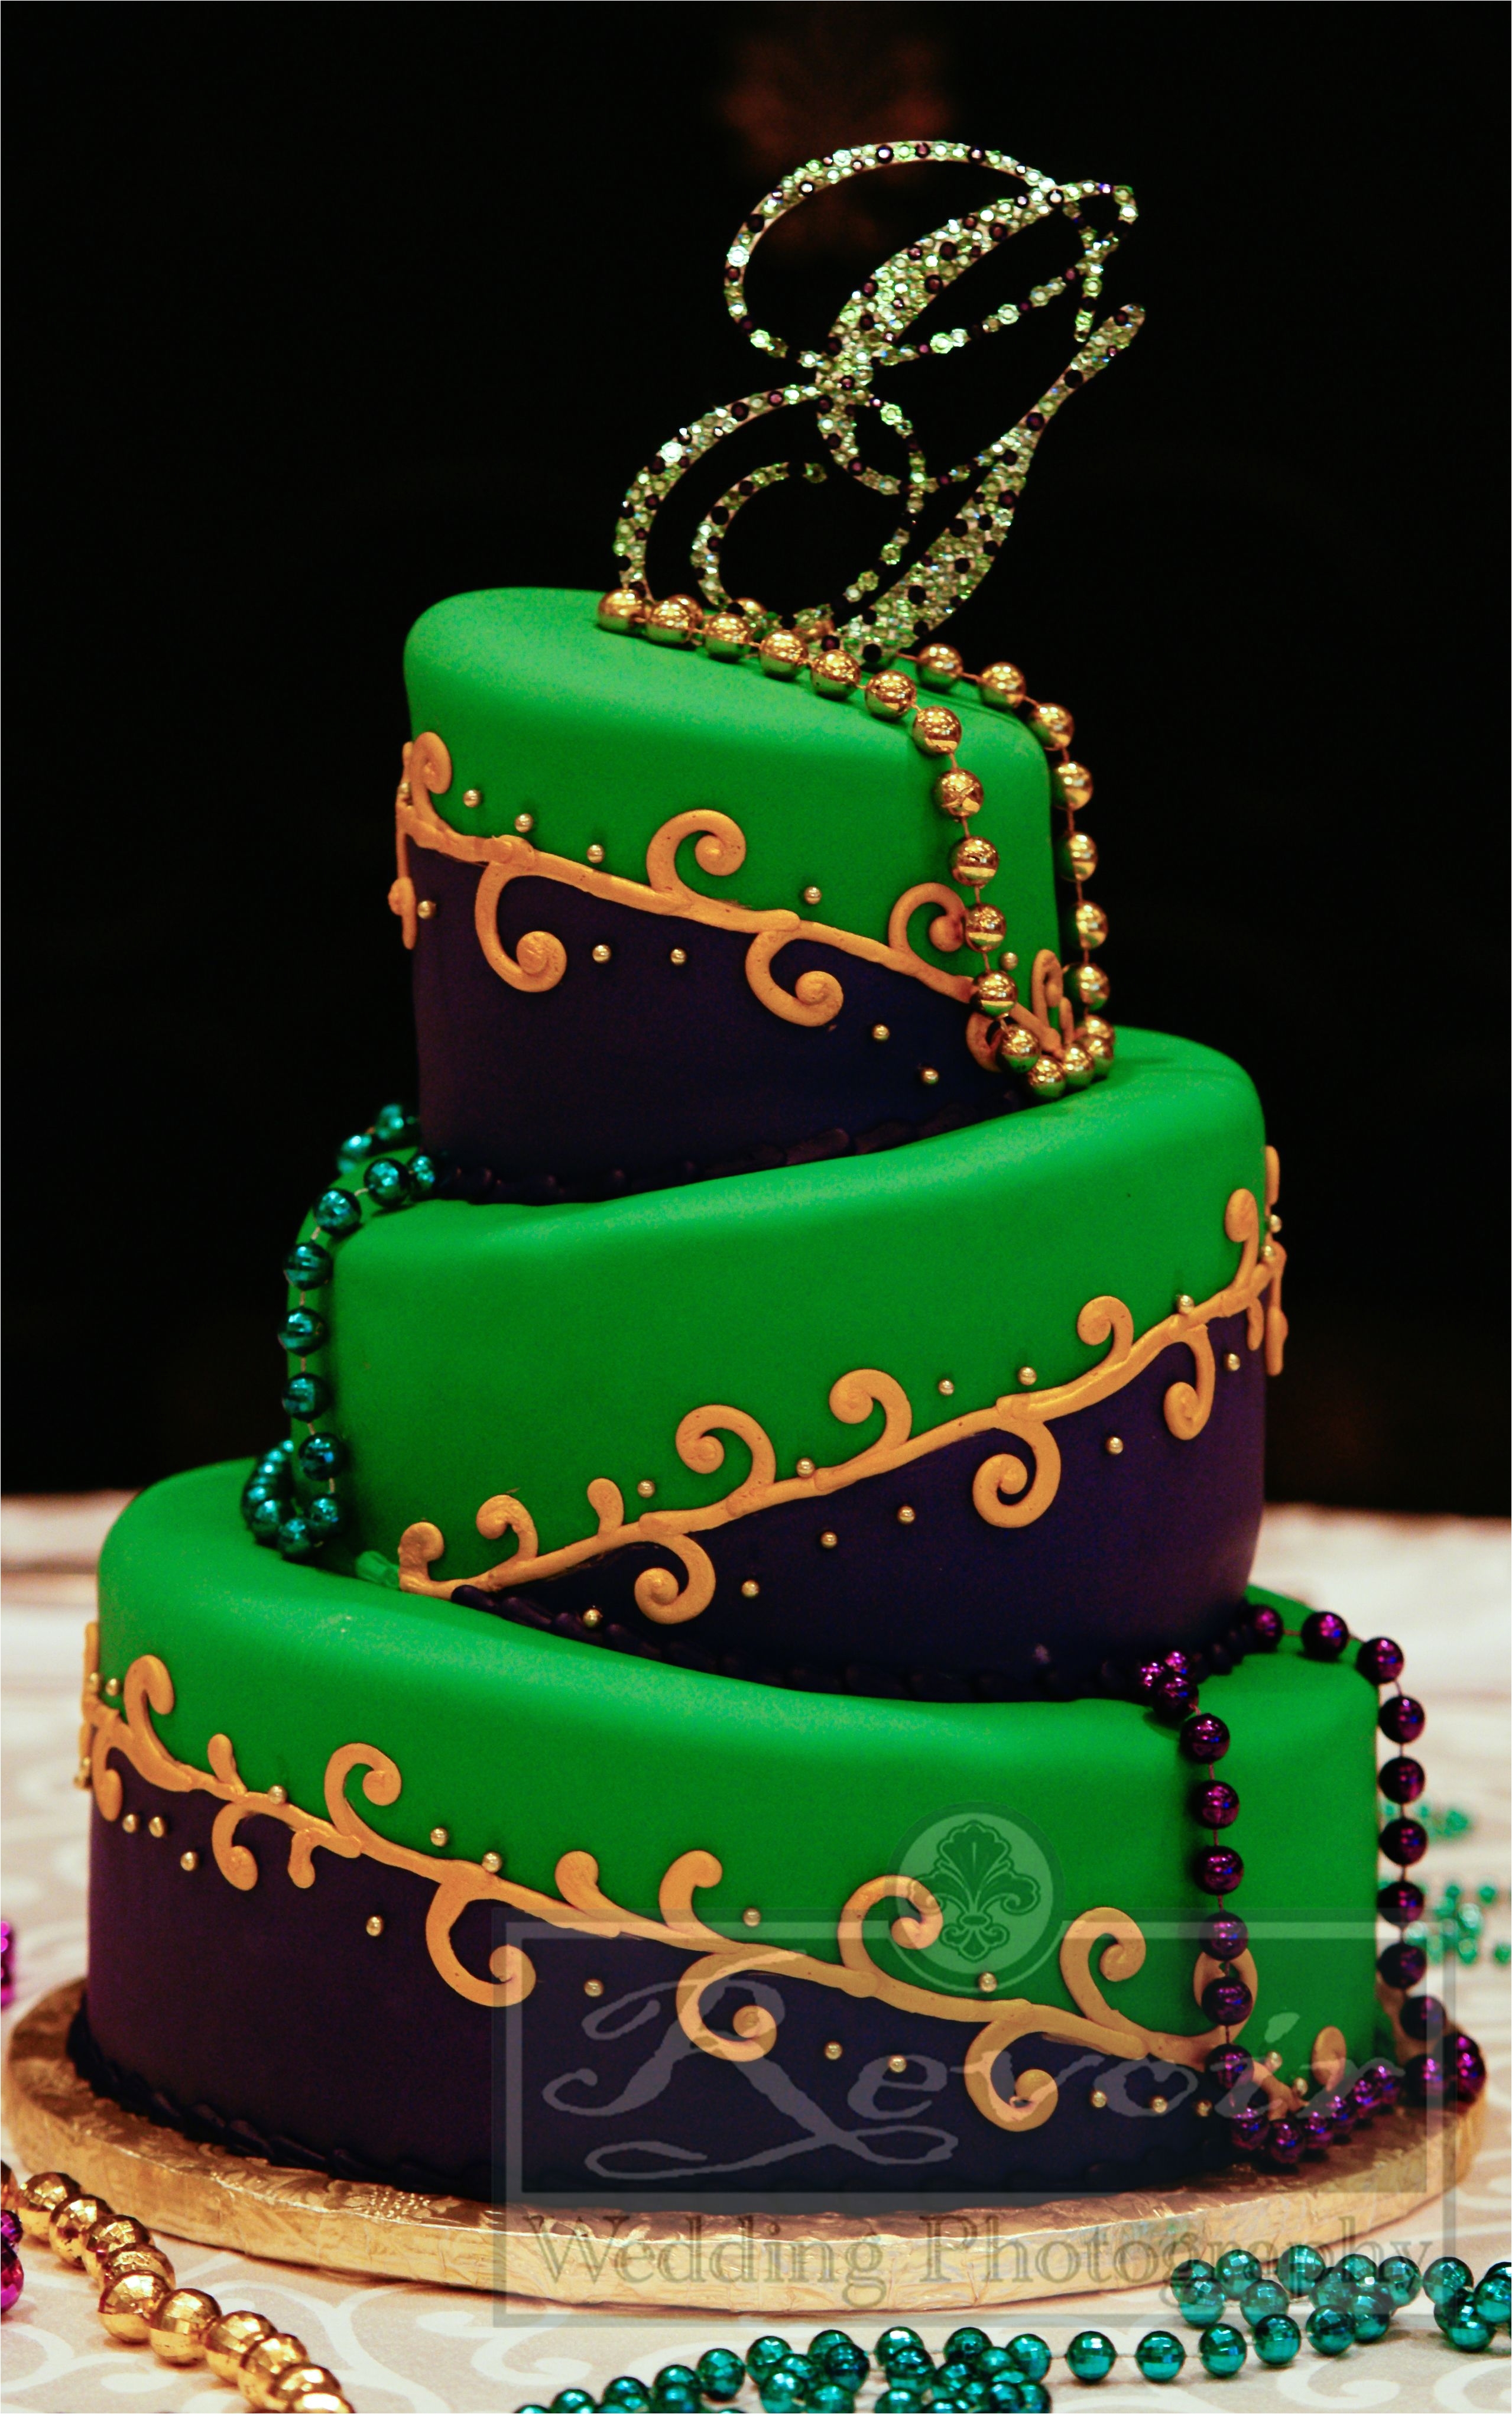 mardi gras themed wedding cake wedding cakes pinterest themed wedding cakes mardi gras and themed weddings